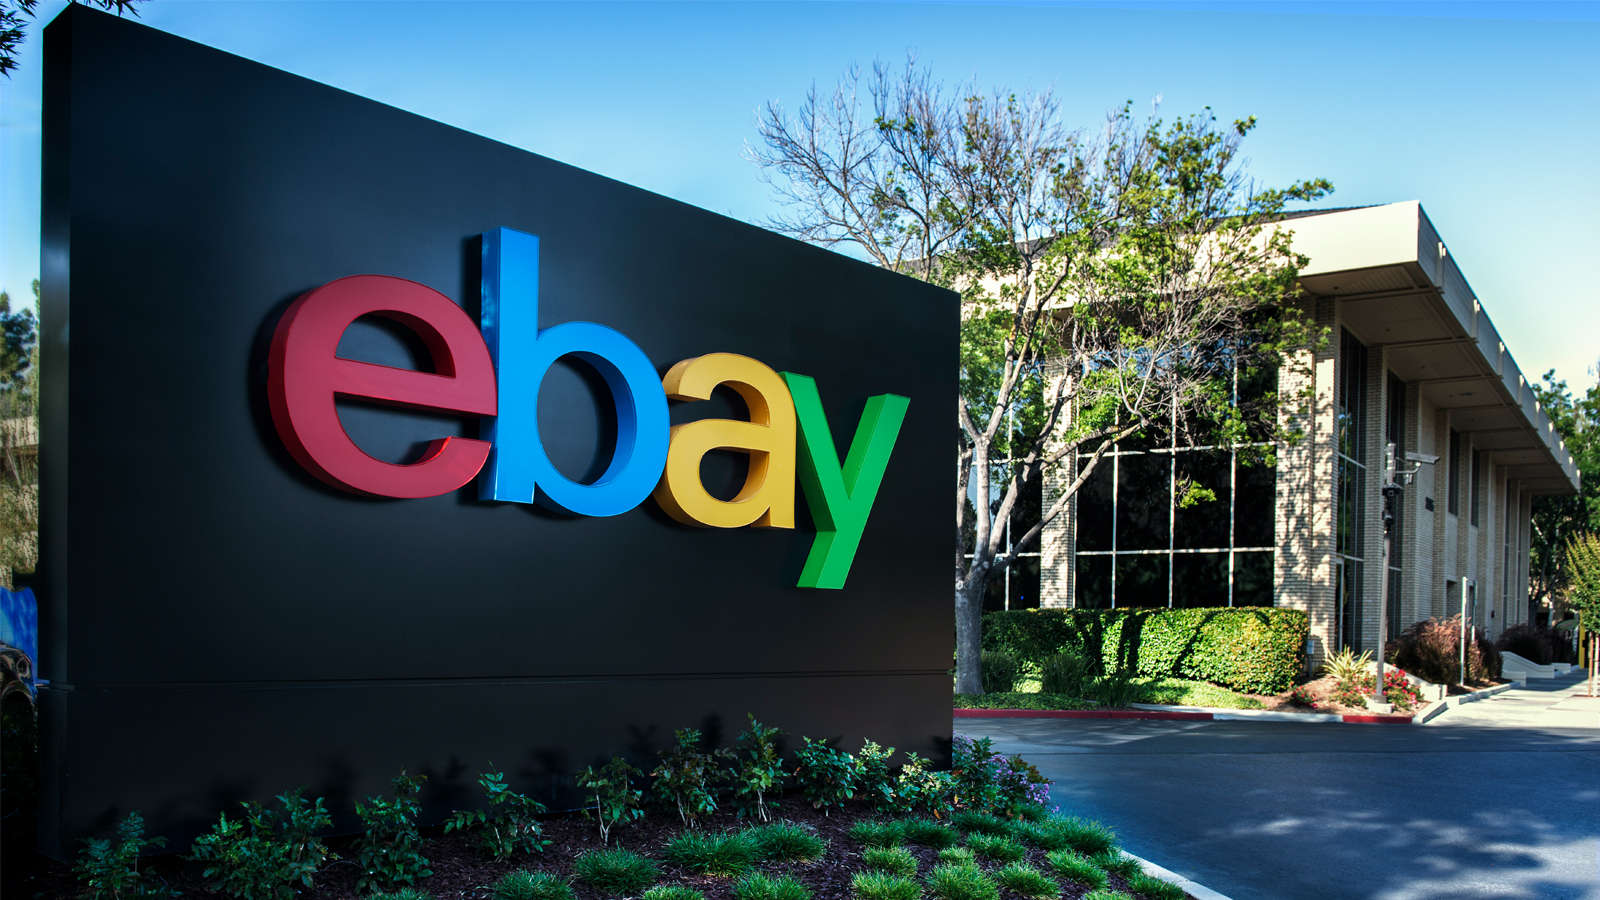 eBay job cuts: Around 1,000 layoffs at tech giant